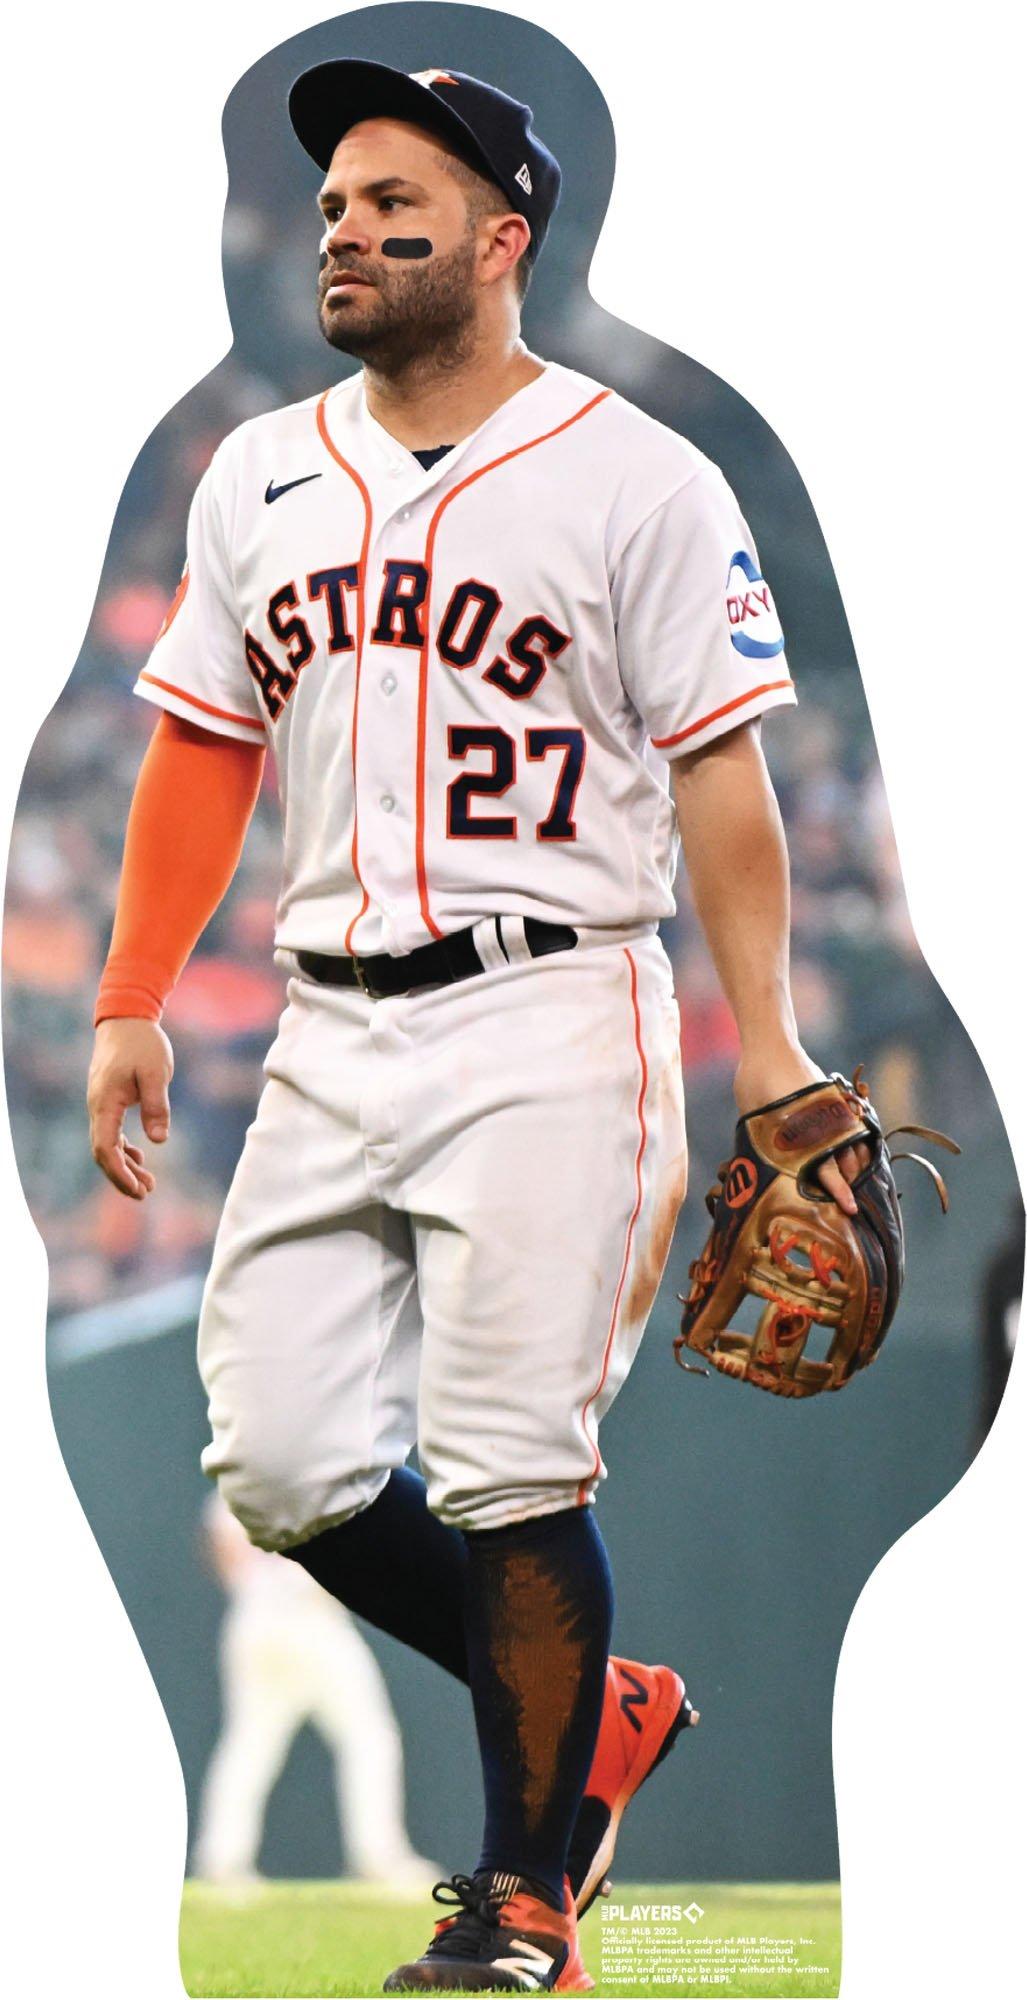 José Altuve Cardboard Cutout, 6ft - MLB Houston Astros